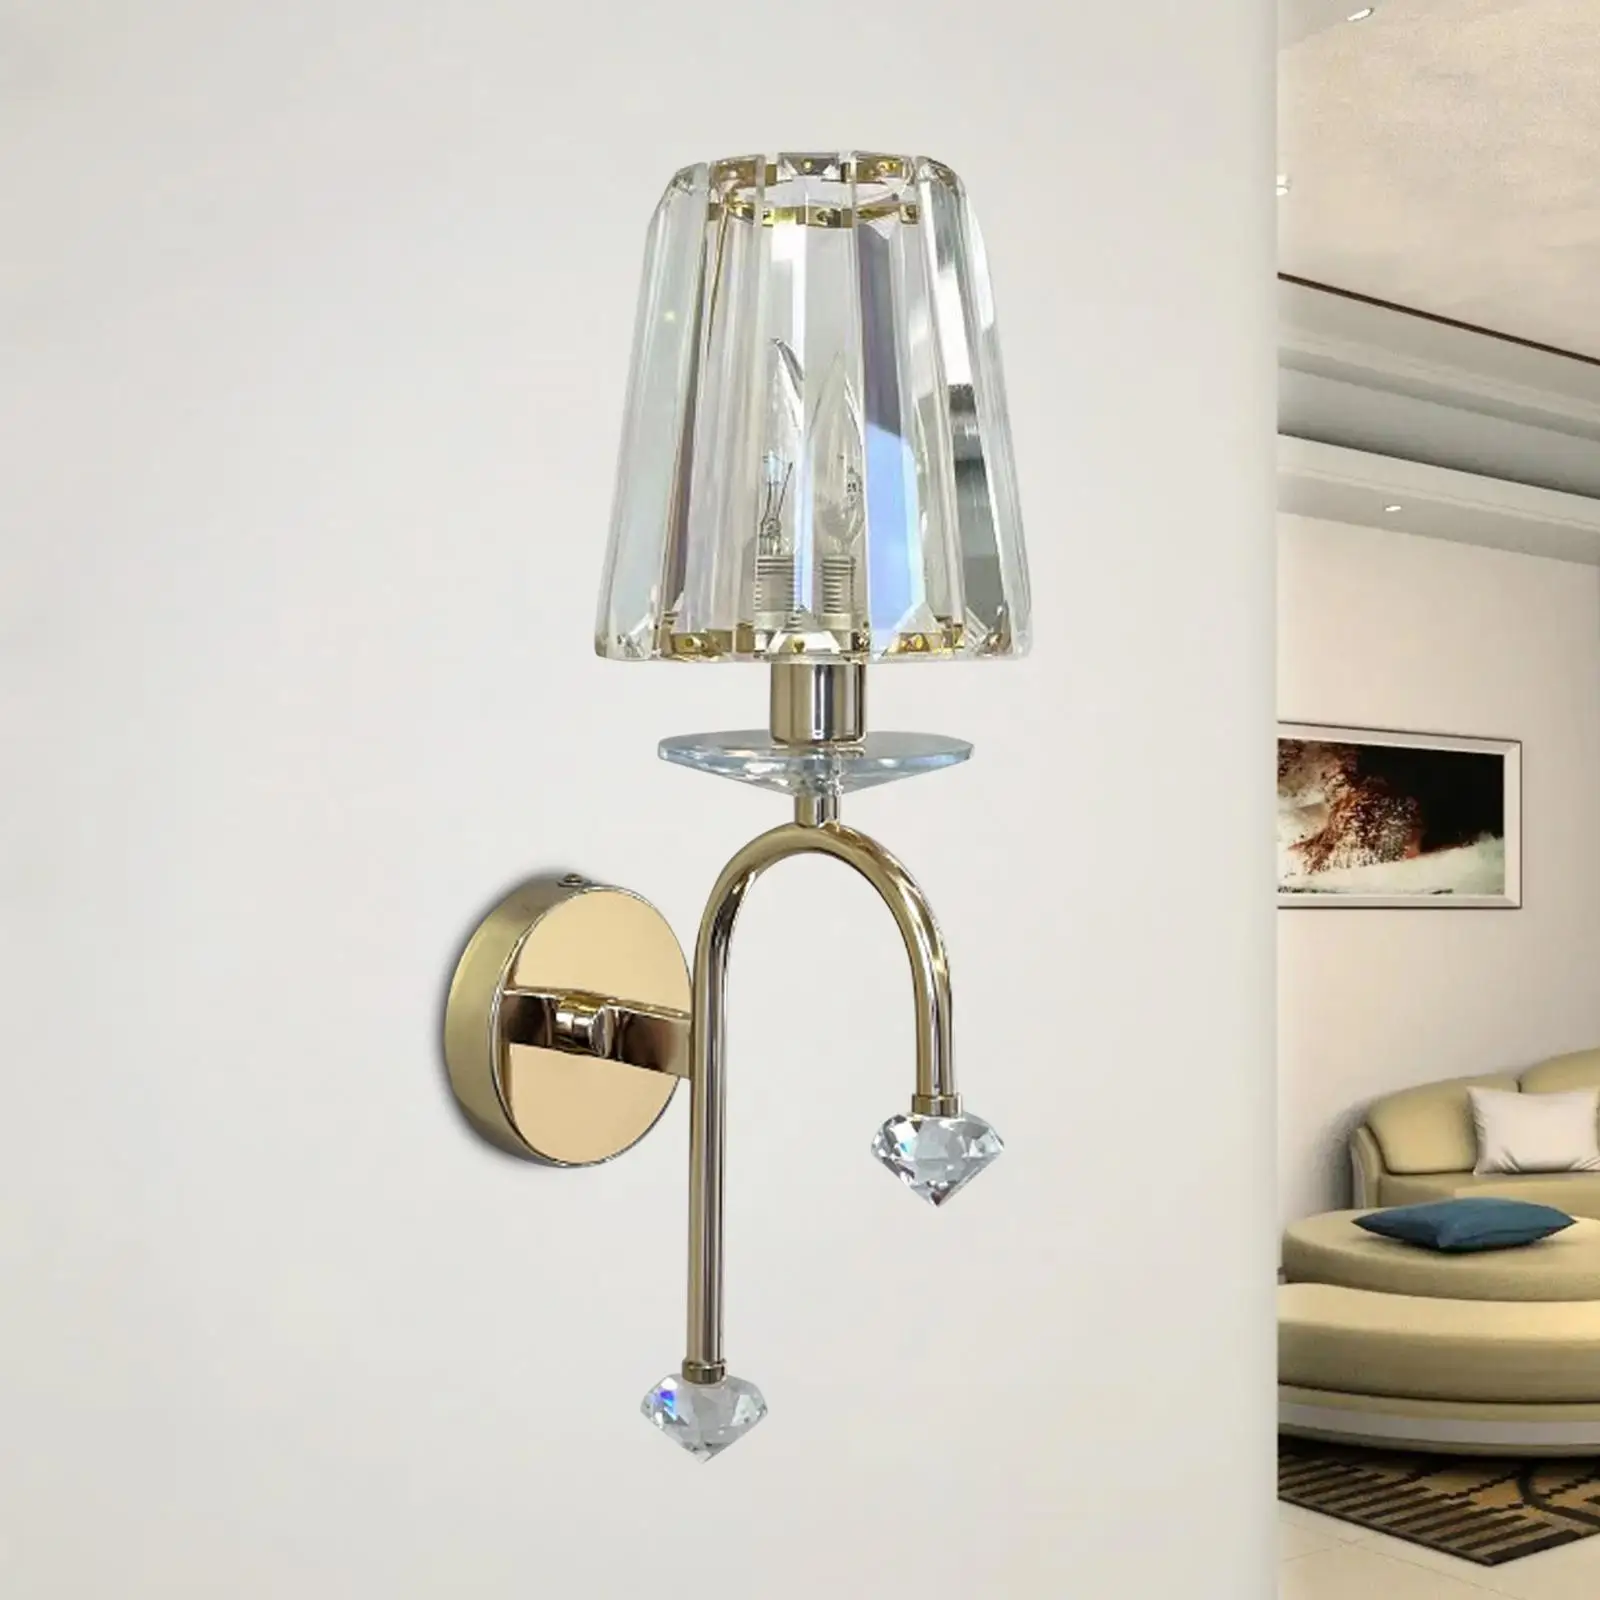 Wall Sconce Lampshade Indoor NightStand Bedside Decor Wall Mount Lamp Shade Modern for Hallway Loft Bathroom Bedroom Study